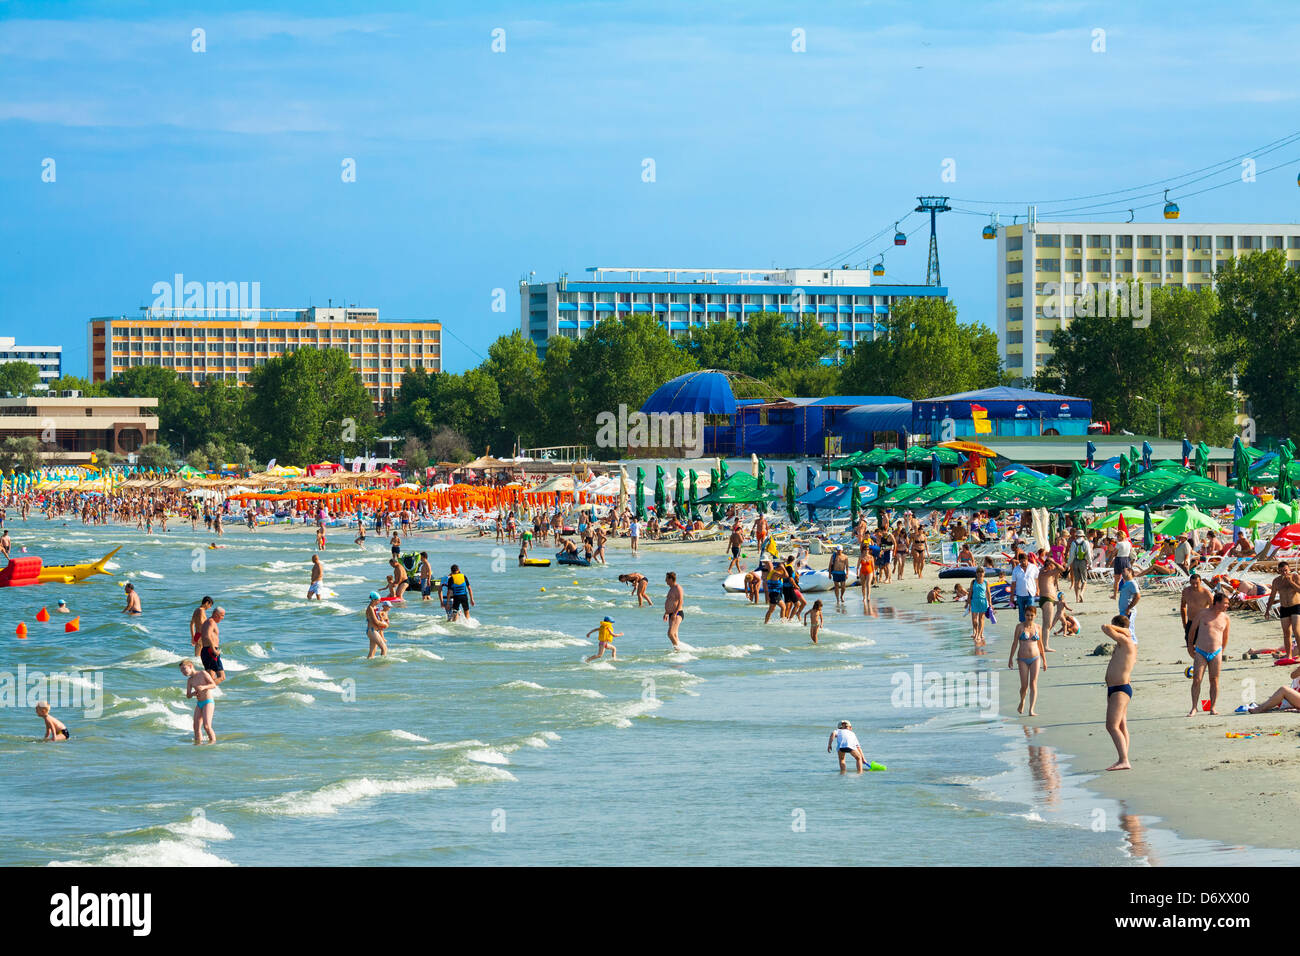 MAMAIA, ROMANIA - AUGUST 5: Tourists enjoy on crowded beach on Aug 05, 2011 in Mamaia, Romania. Stock Photo